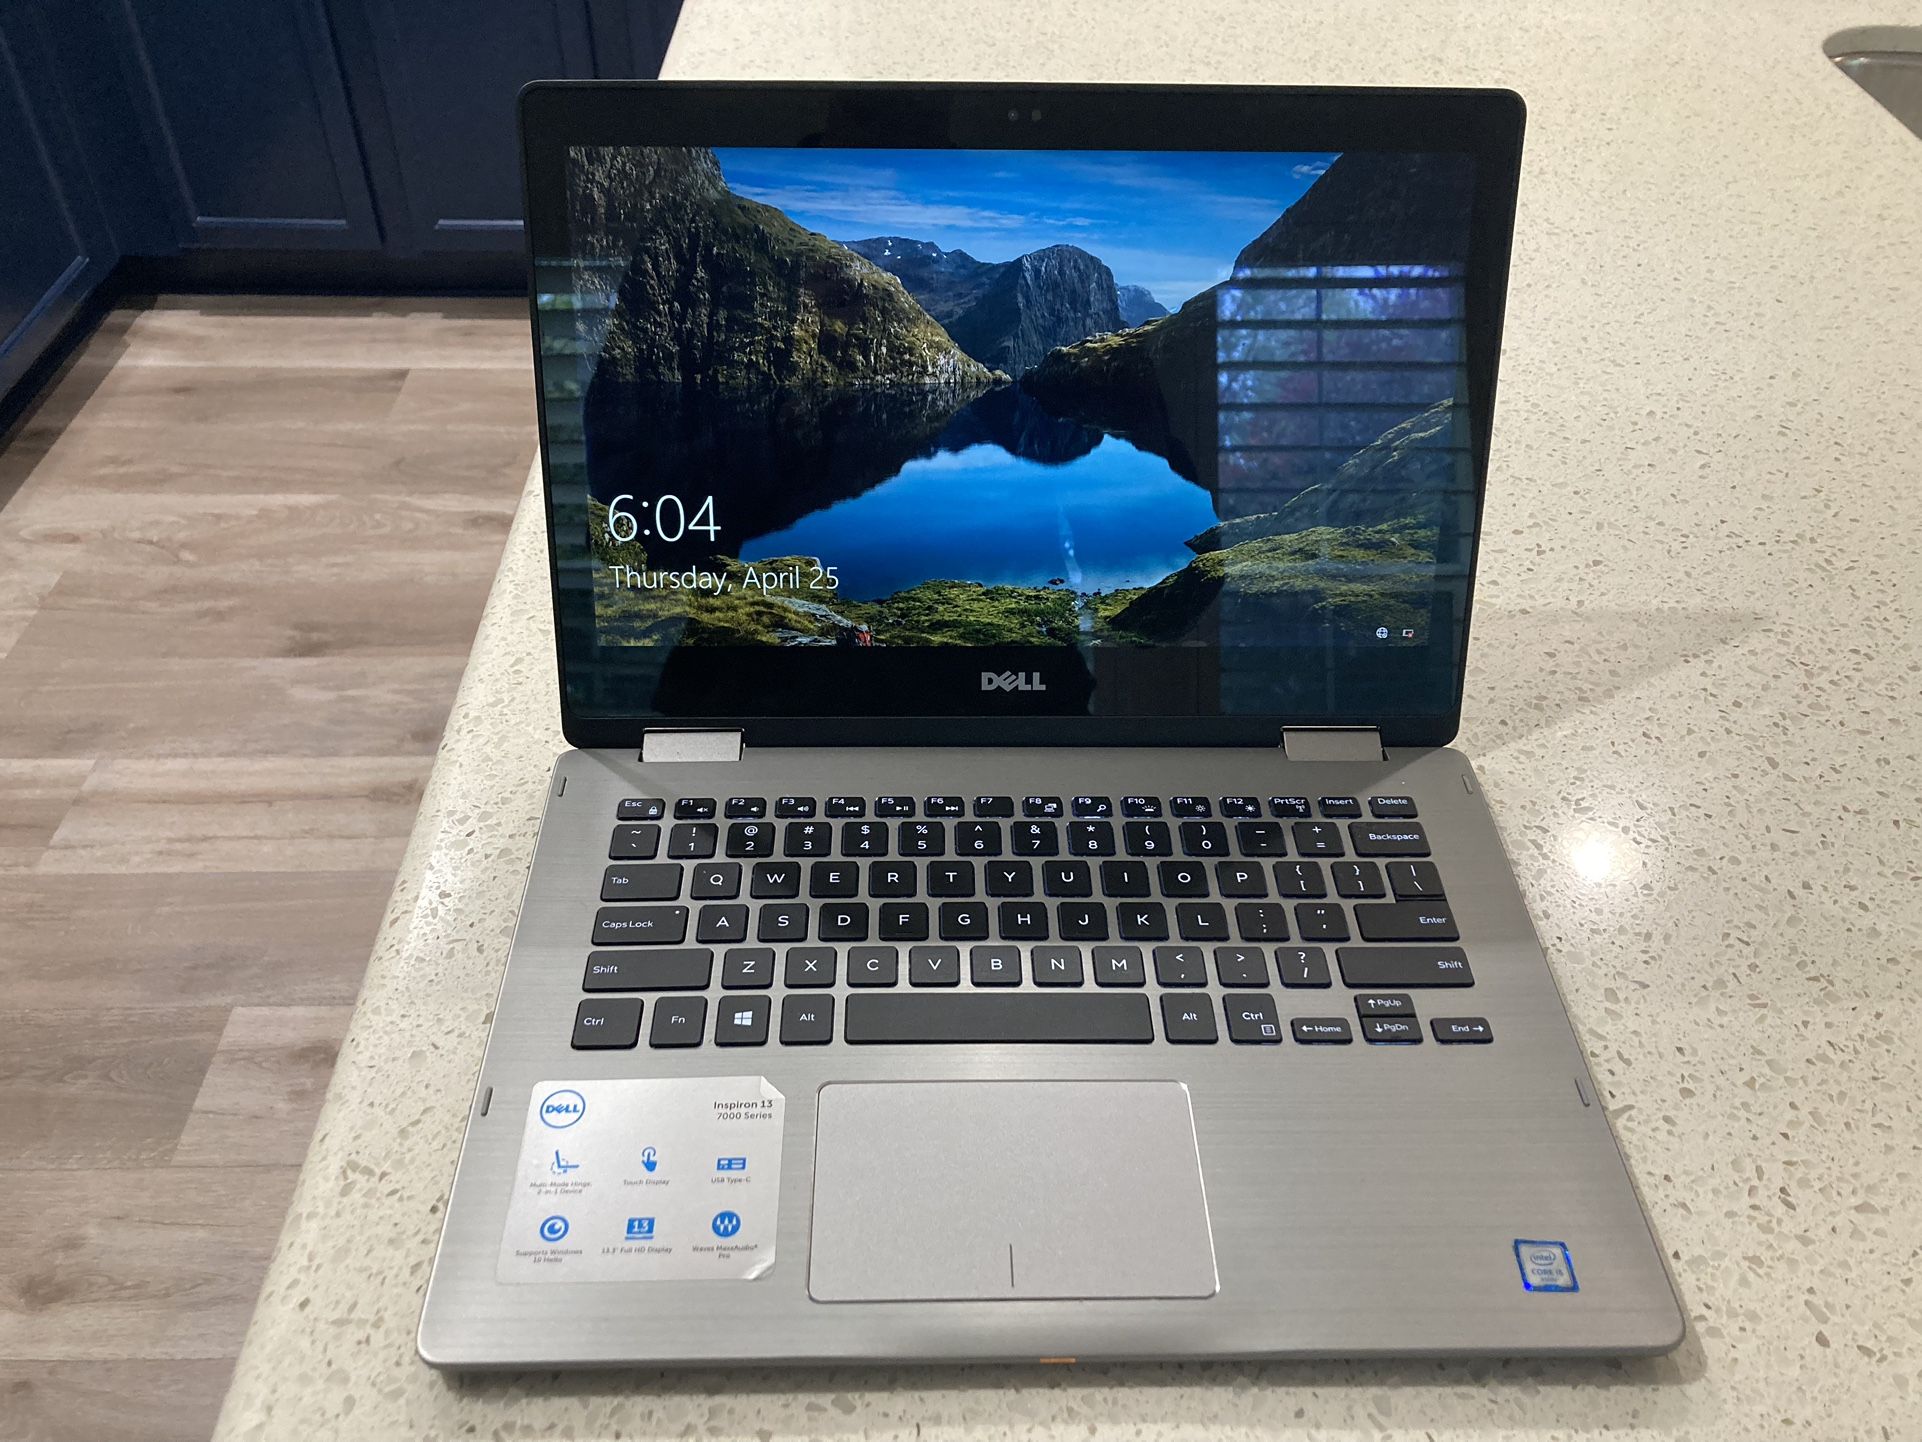 Dell Inspiron 7368 Laptop